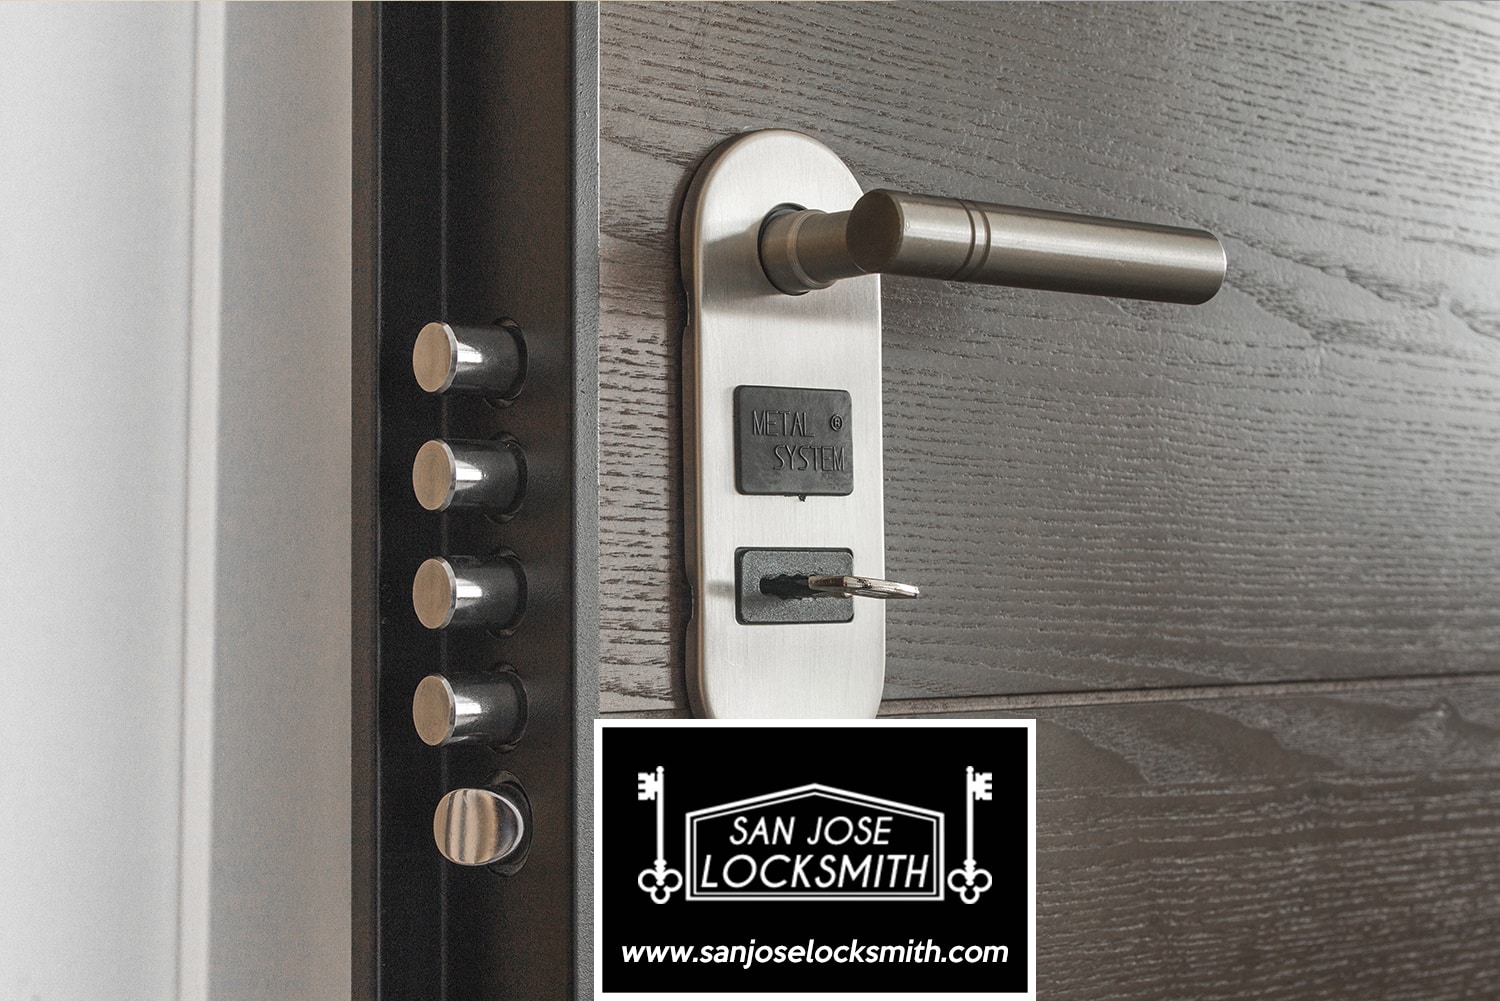 San Jose Locksmith, US, locks master